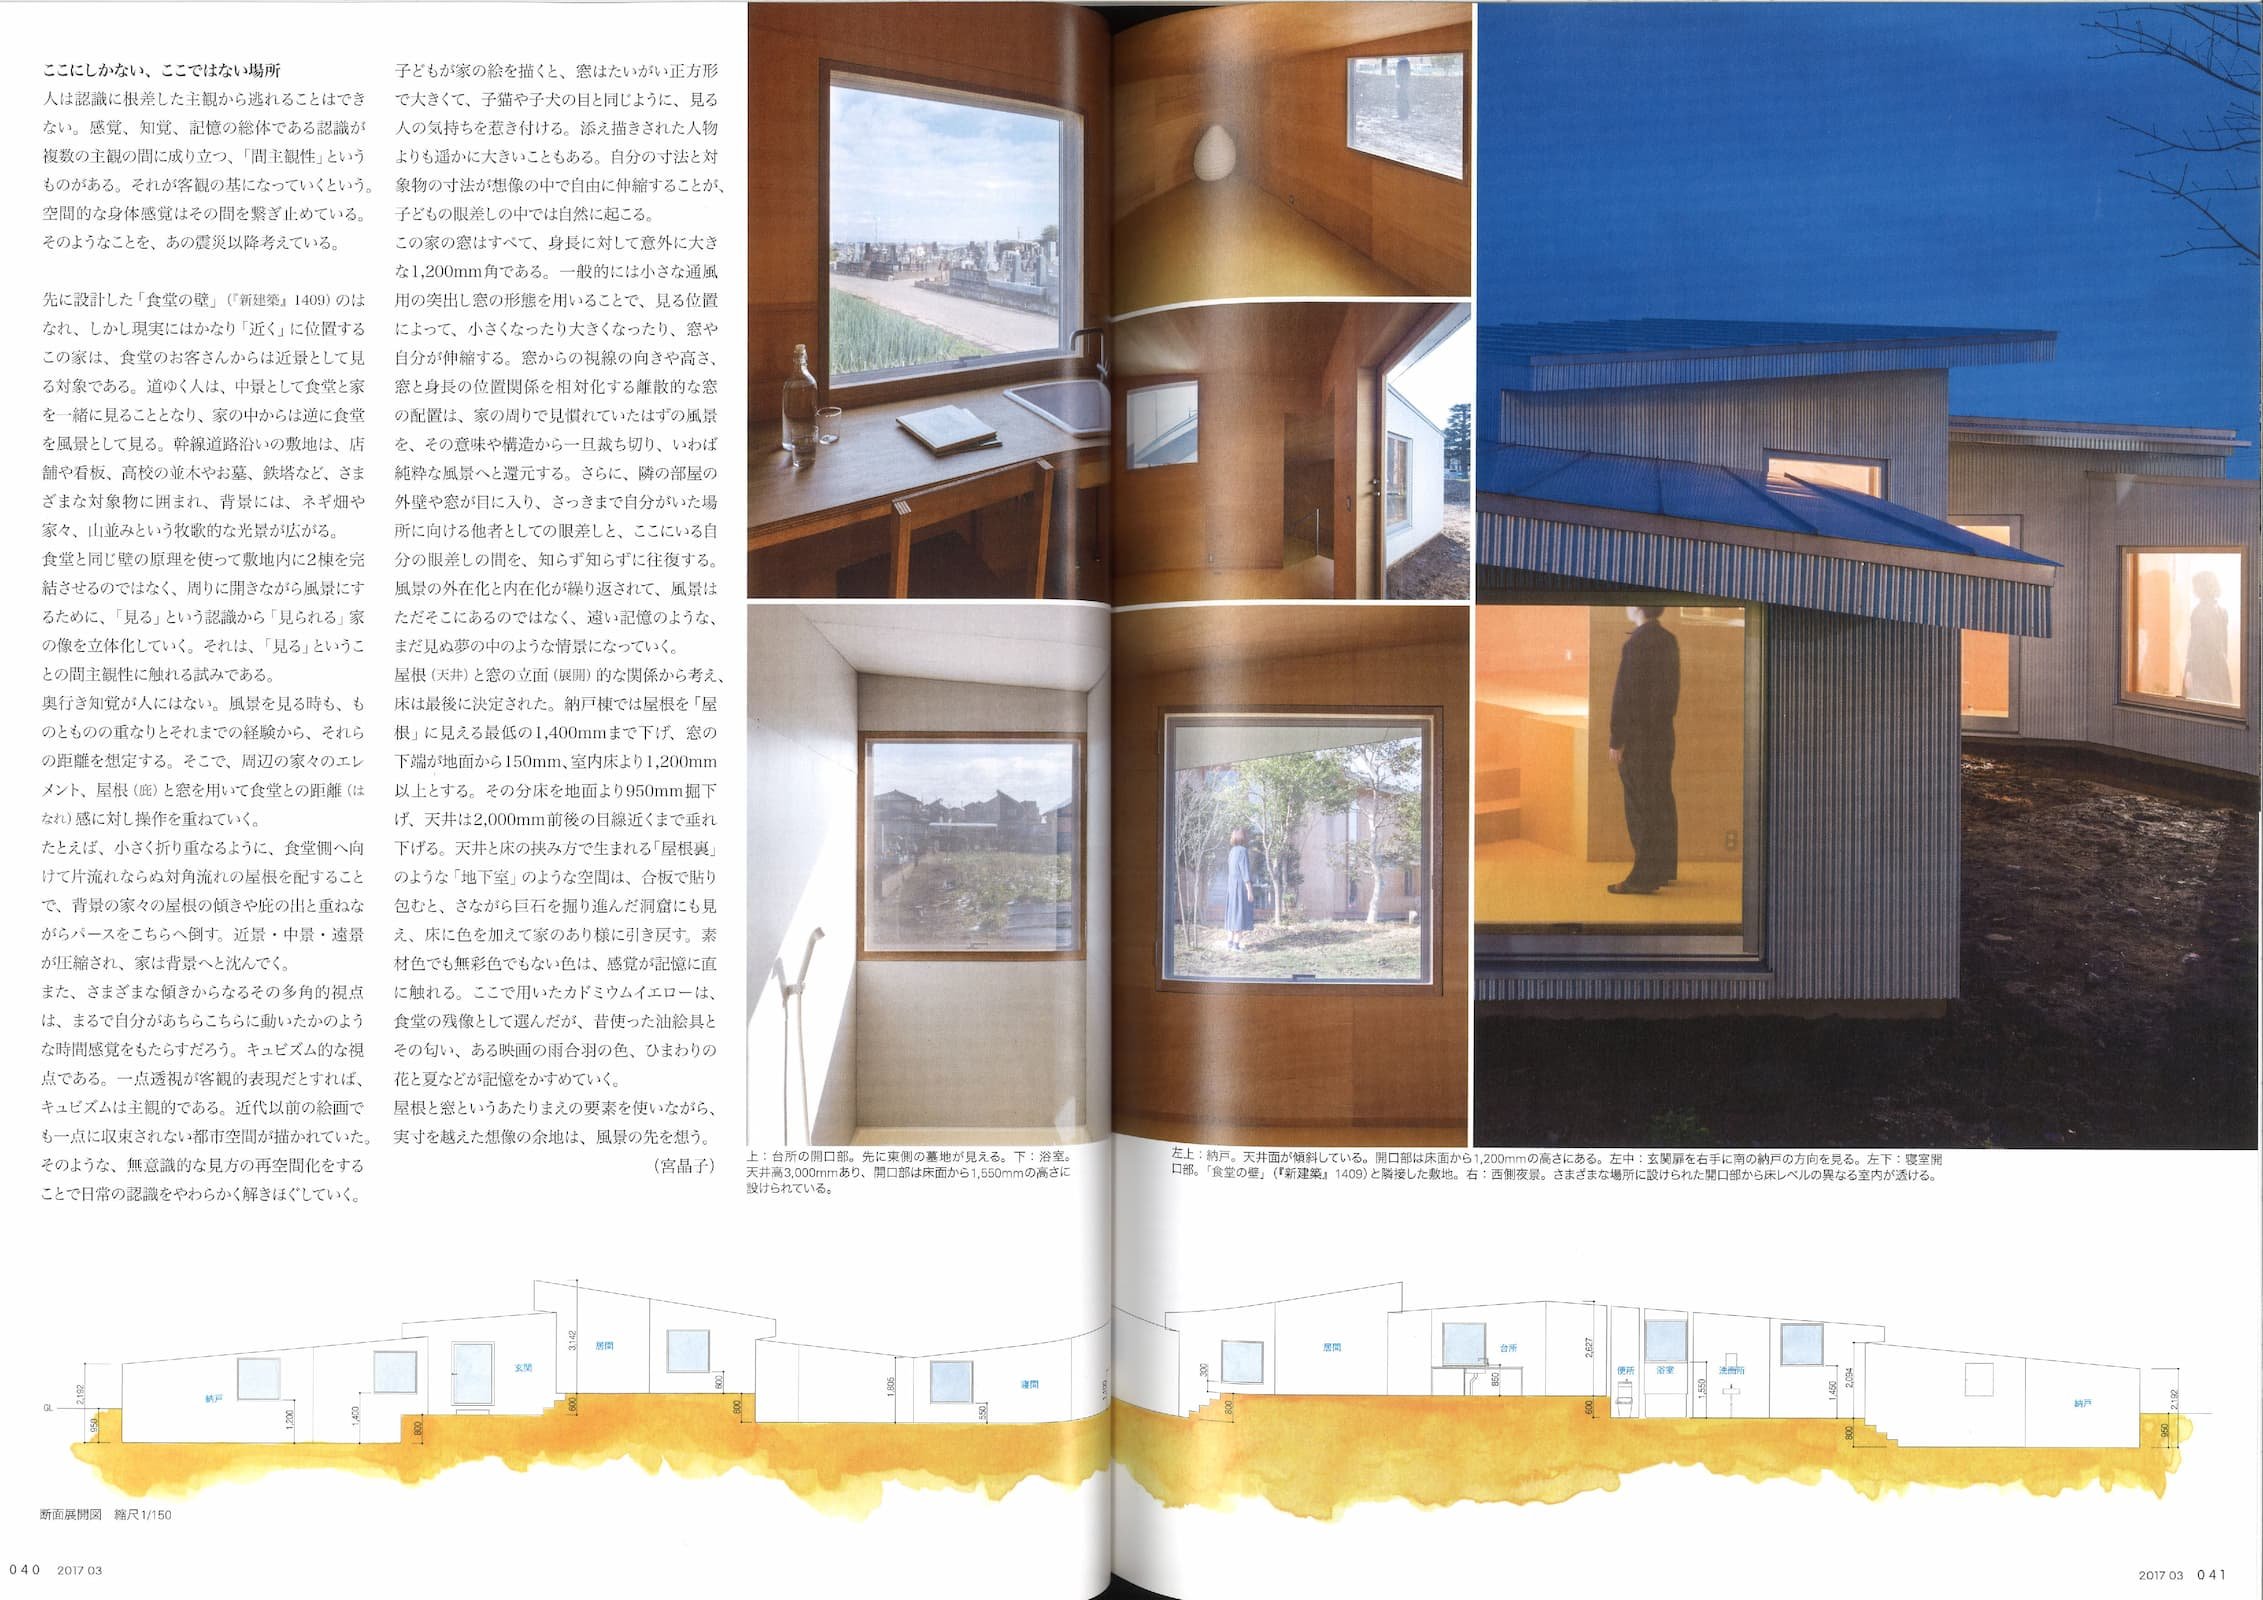 住宅特集 - Housing Special Feature 371 - Wall Behaviour_Page_5.jpg